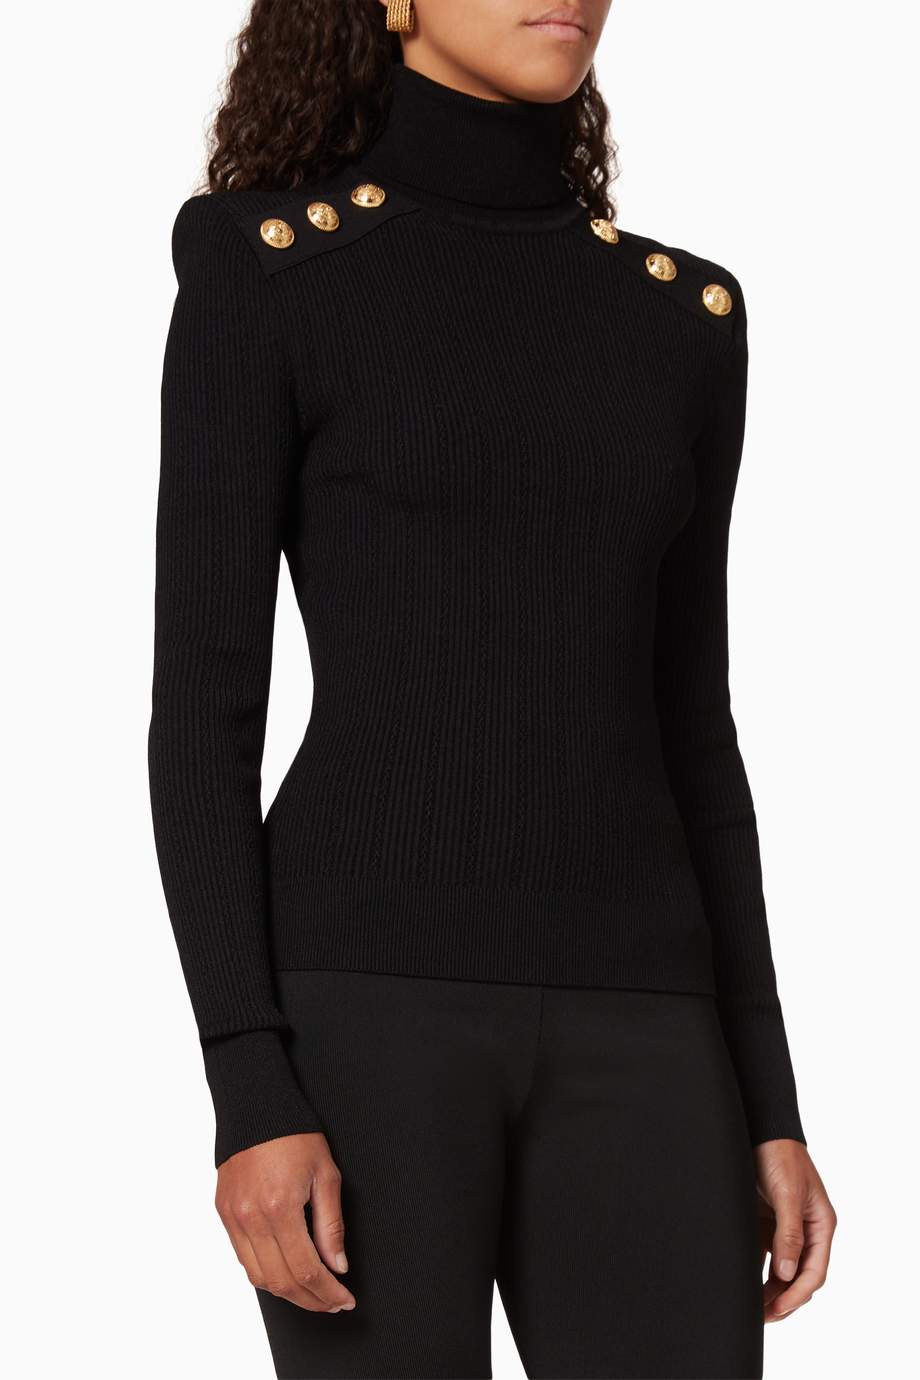 Shop Balmain Black Button-Embellished Turtleneck Sweater for Women ...